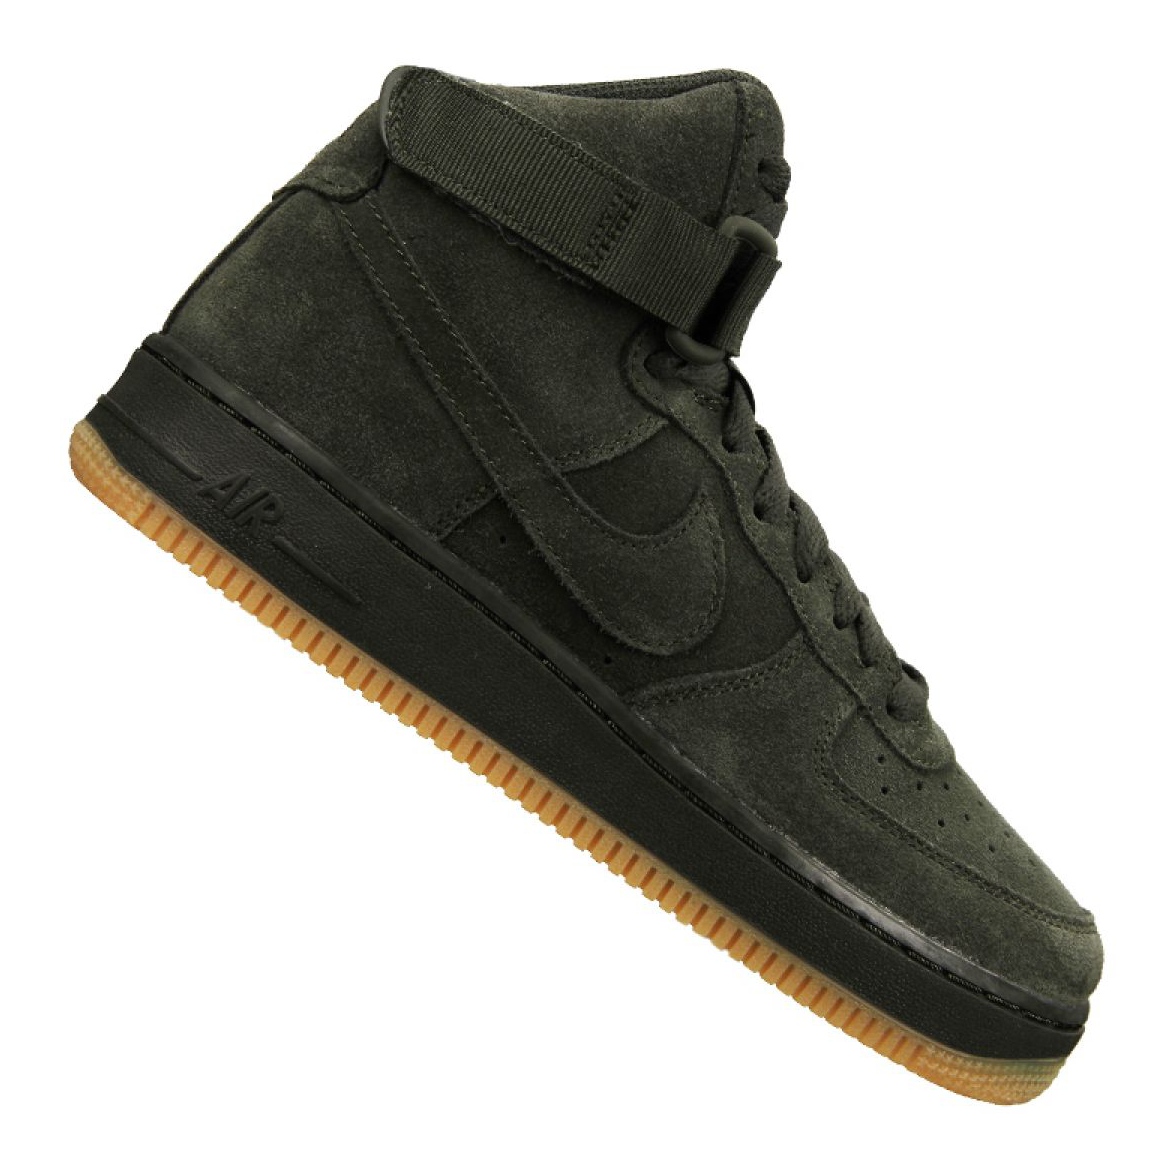 Nike - Air Force 1 High LV8 3 807617-300 - Sneakers - Dark Green, Mens \  Nike